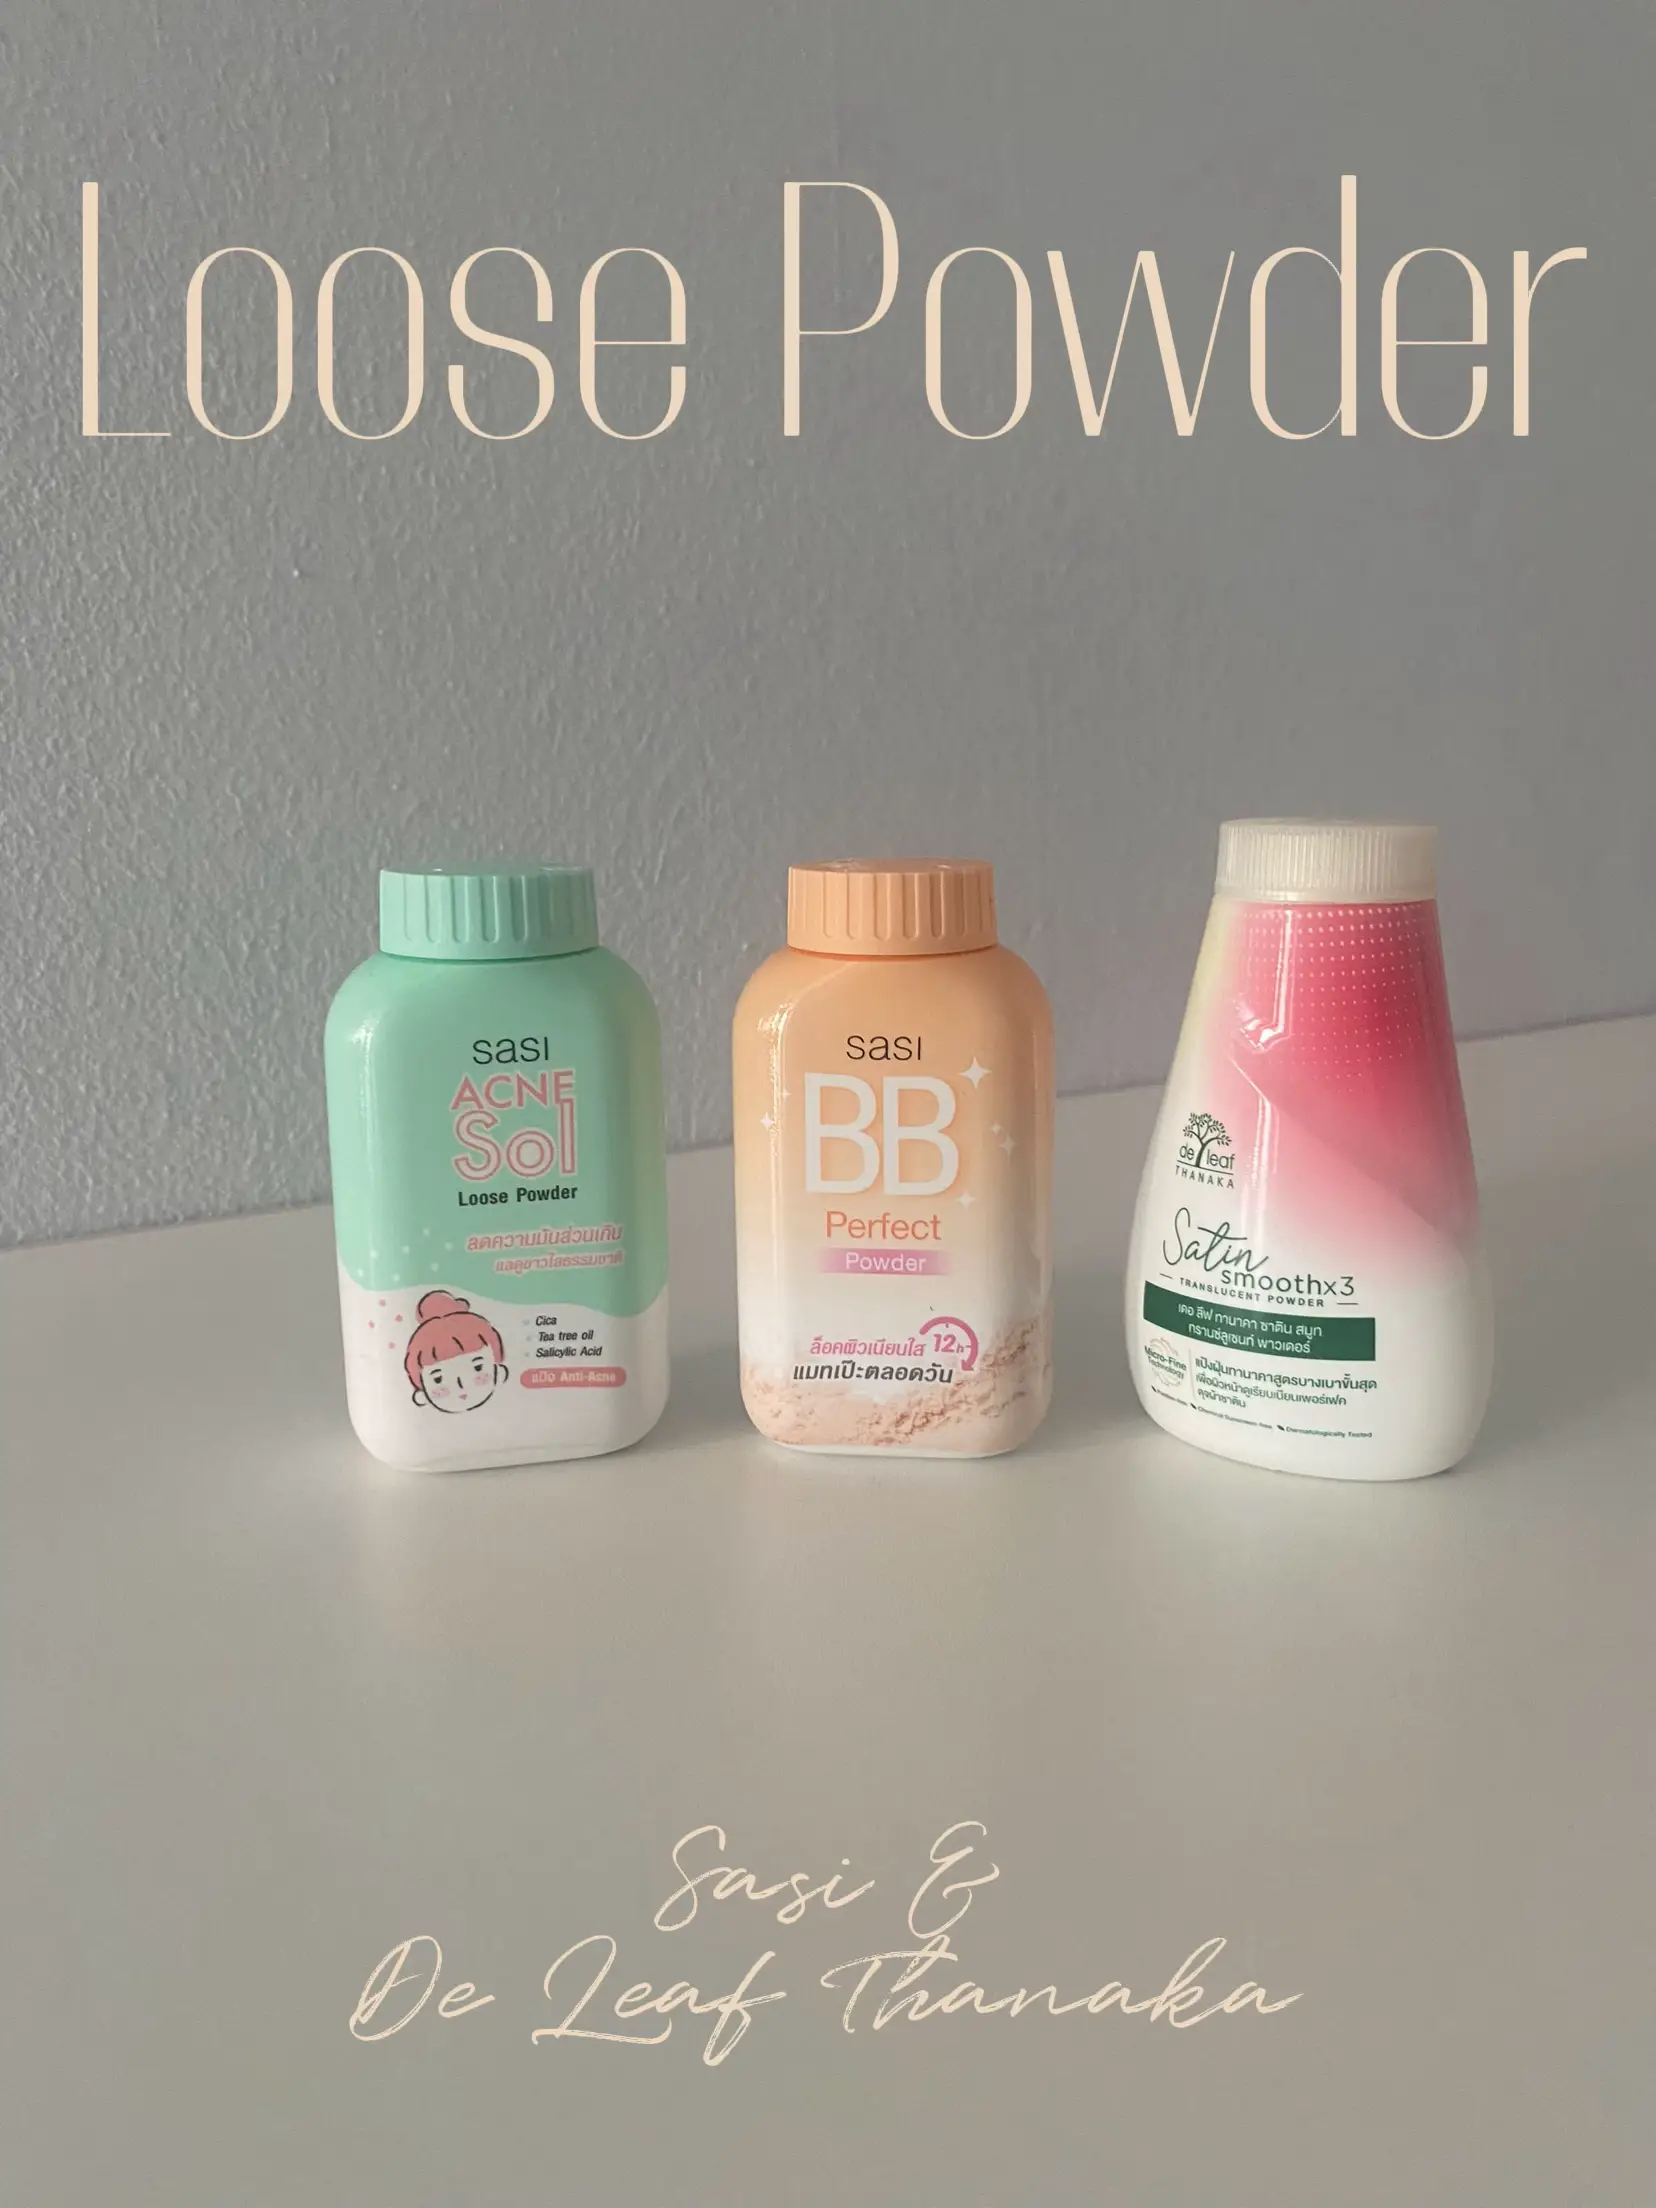 Review : Sasi BB Perfect powder